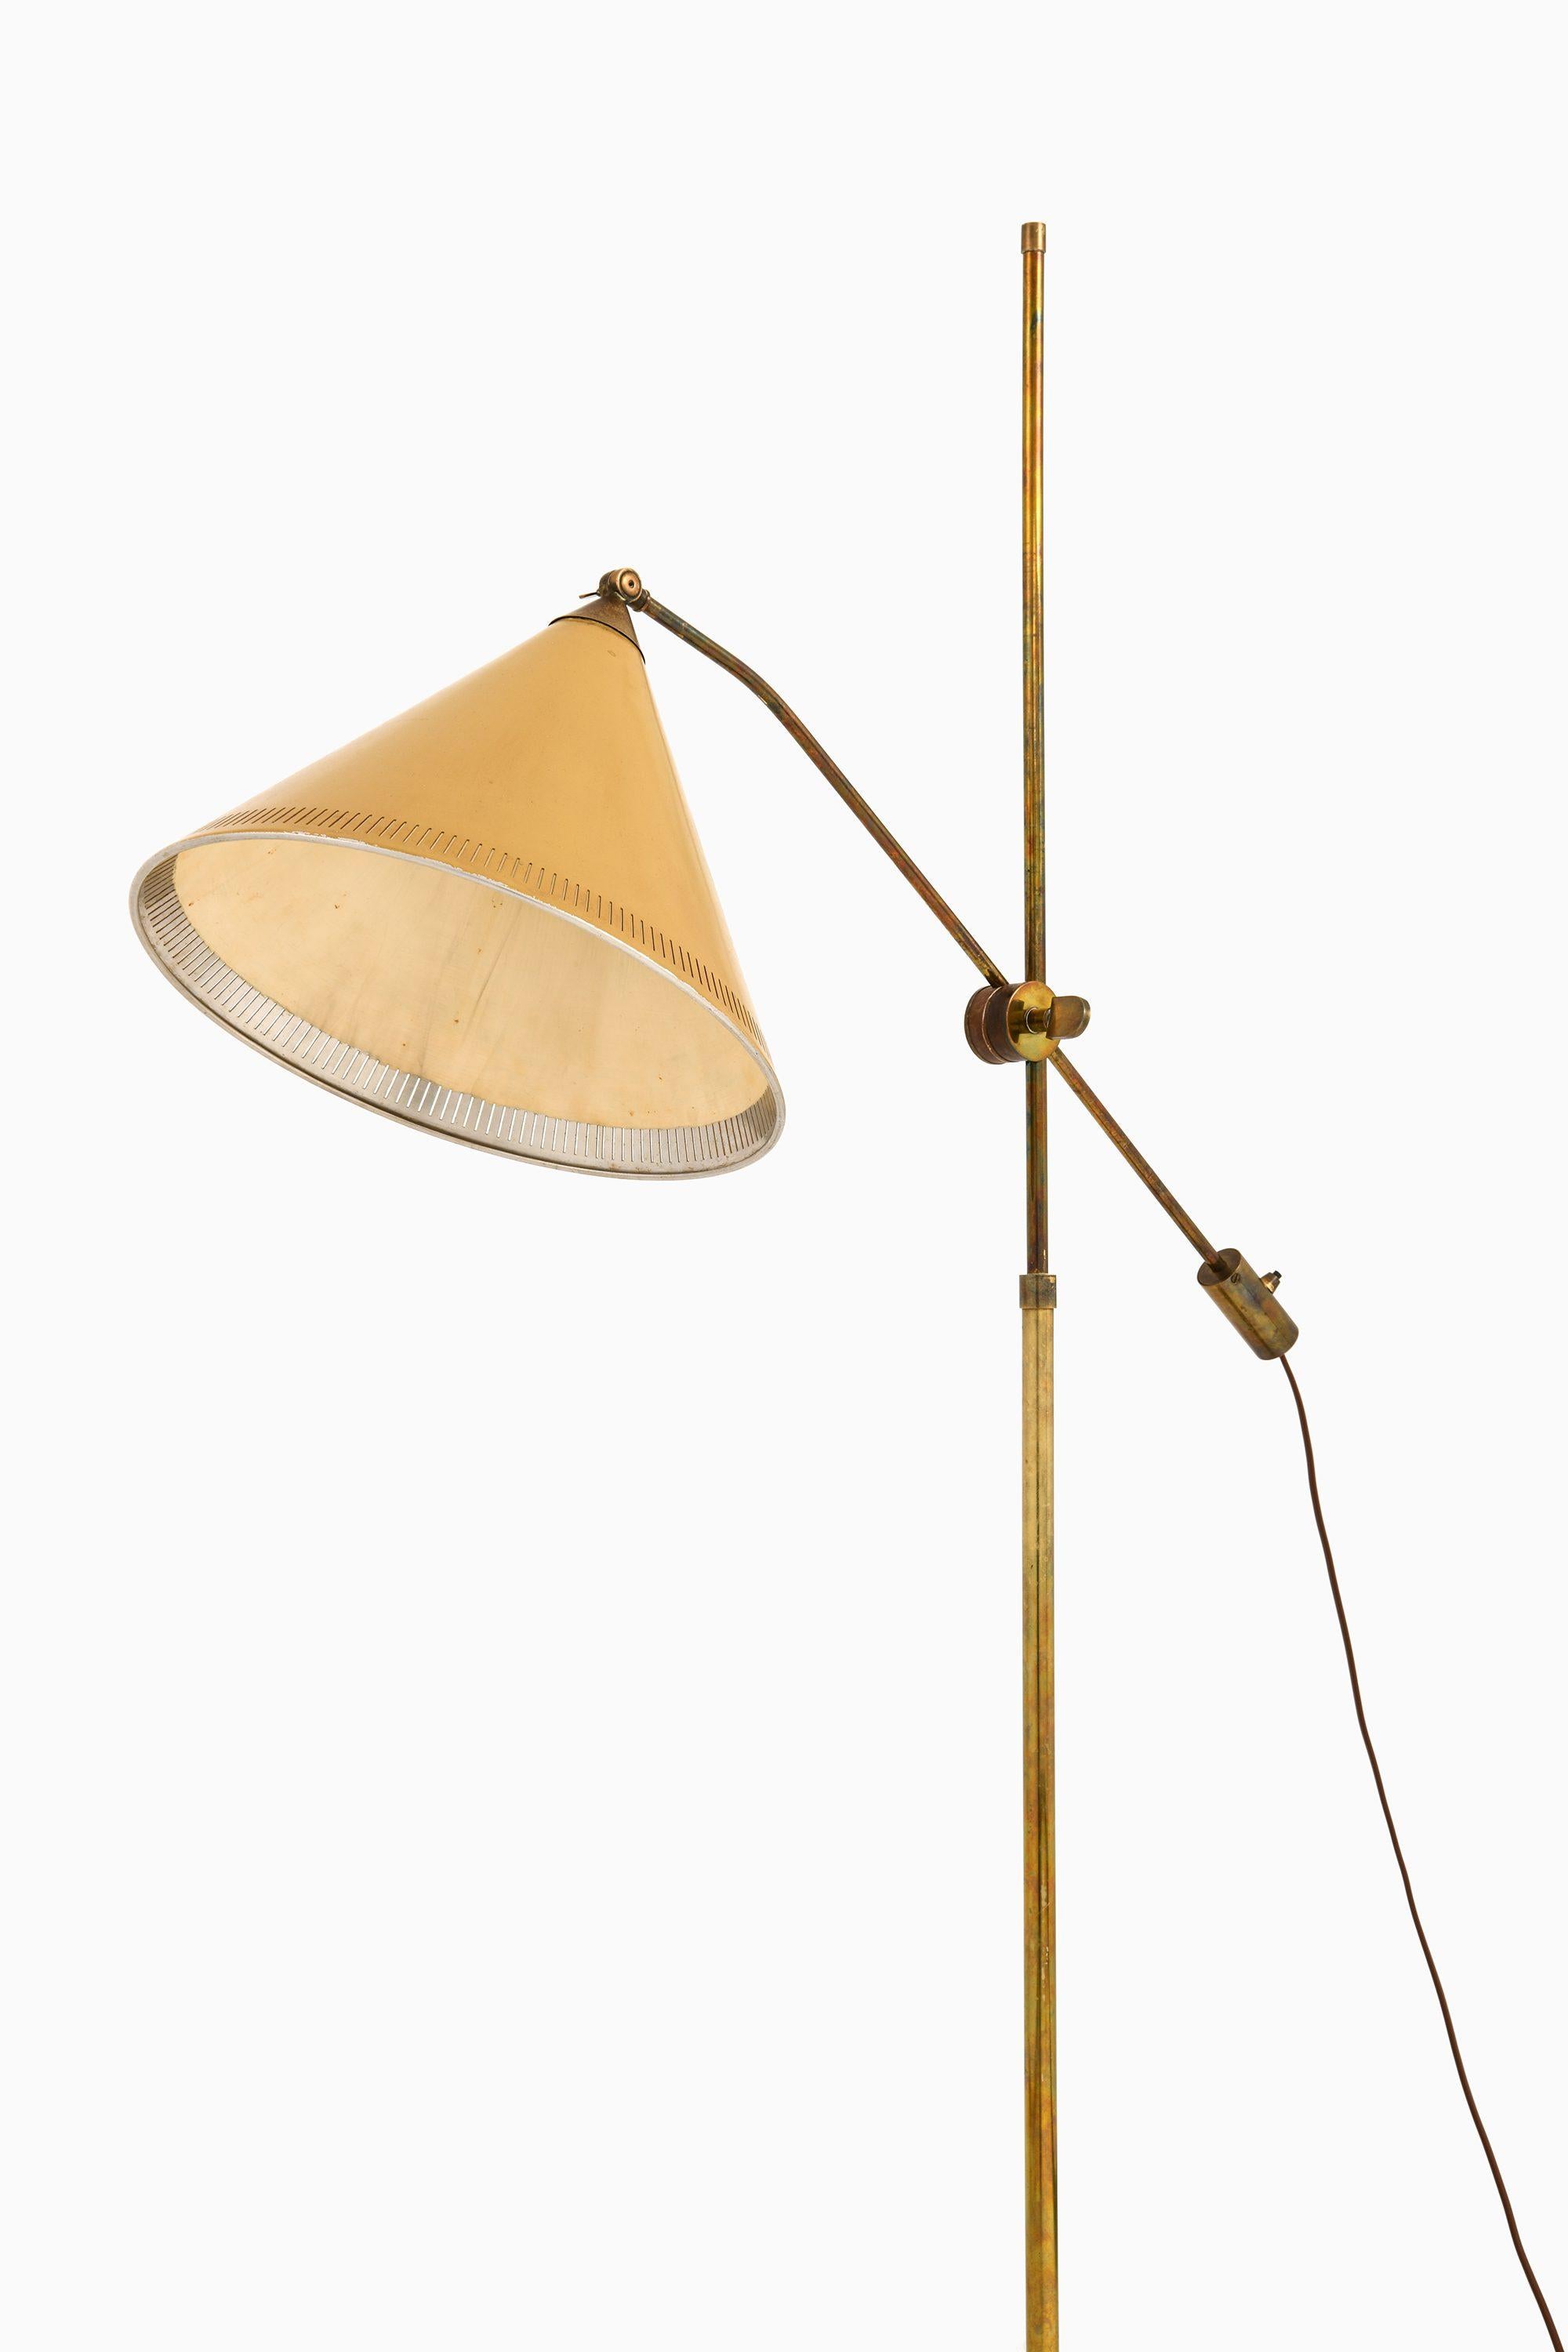 Danish Floor Lamp in Brass and Original Yellow Lamp Shade, 1950's For Sale